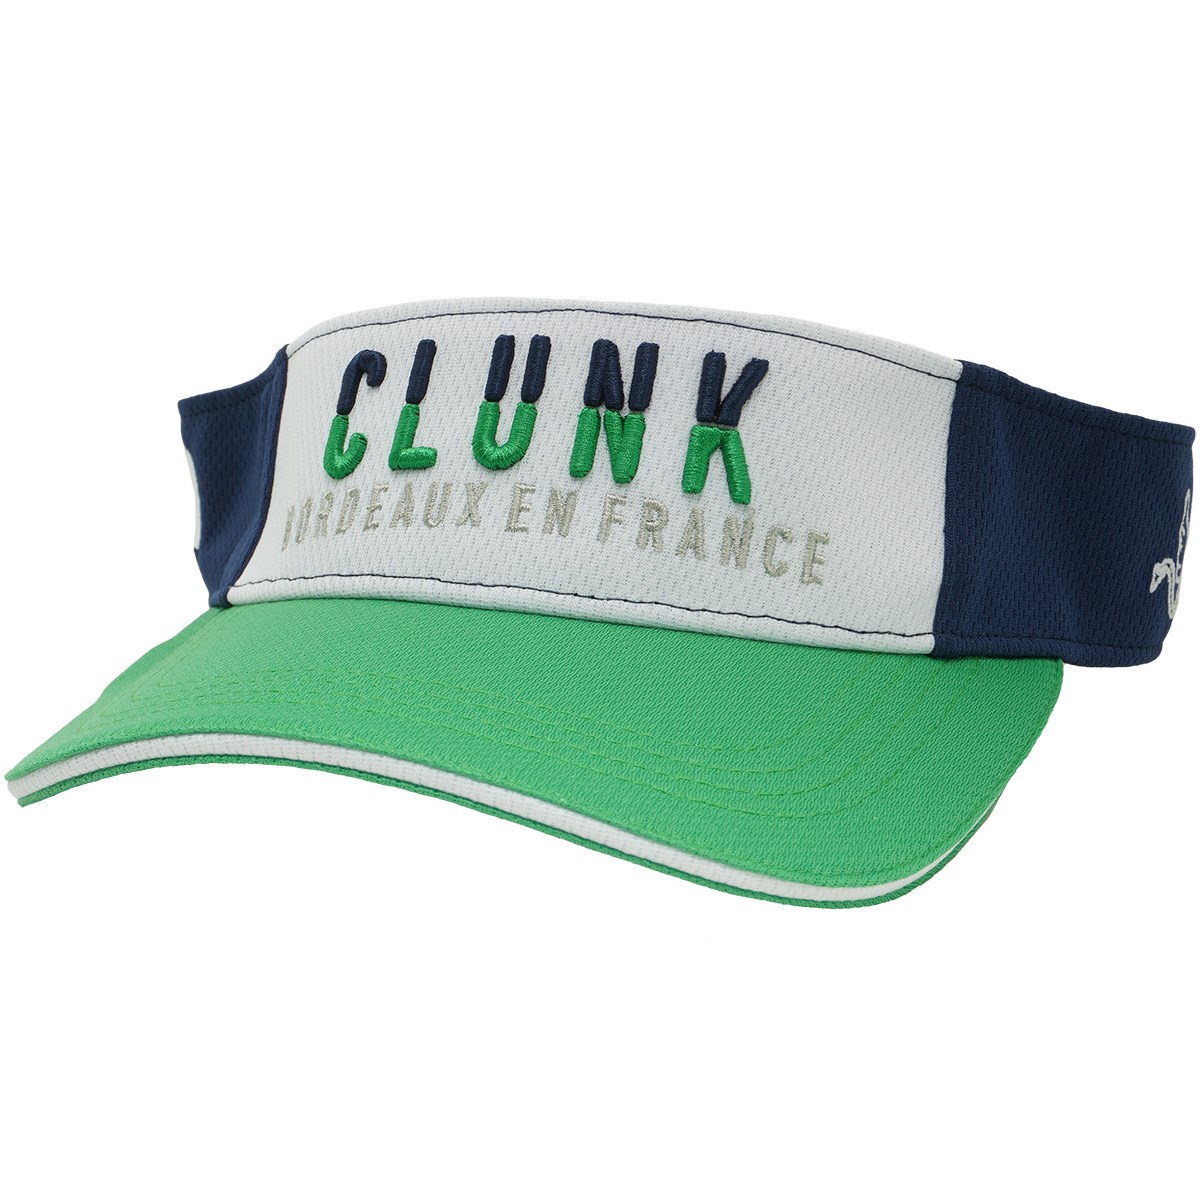 dショッピング |クランク Clunk ベルオアシス スリートーンサン 